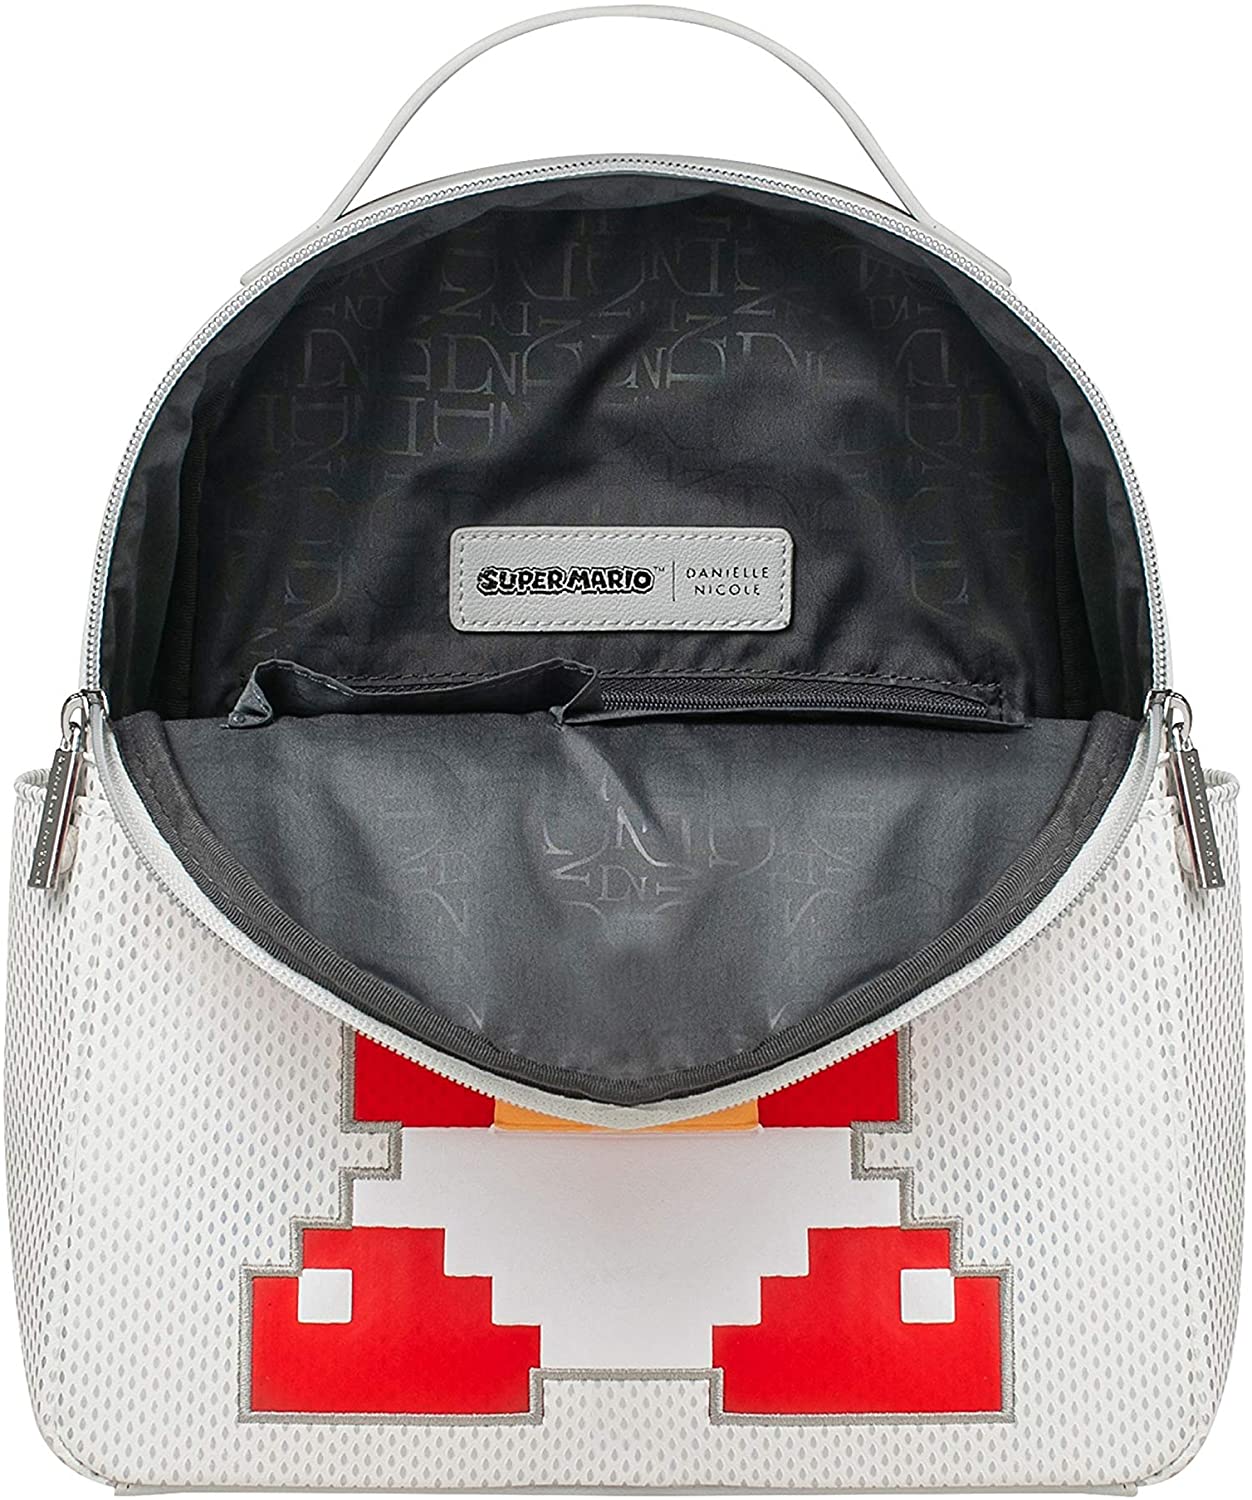 Danielle Nicole Super Mario Toad backpack interior